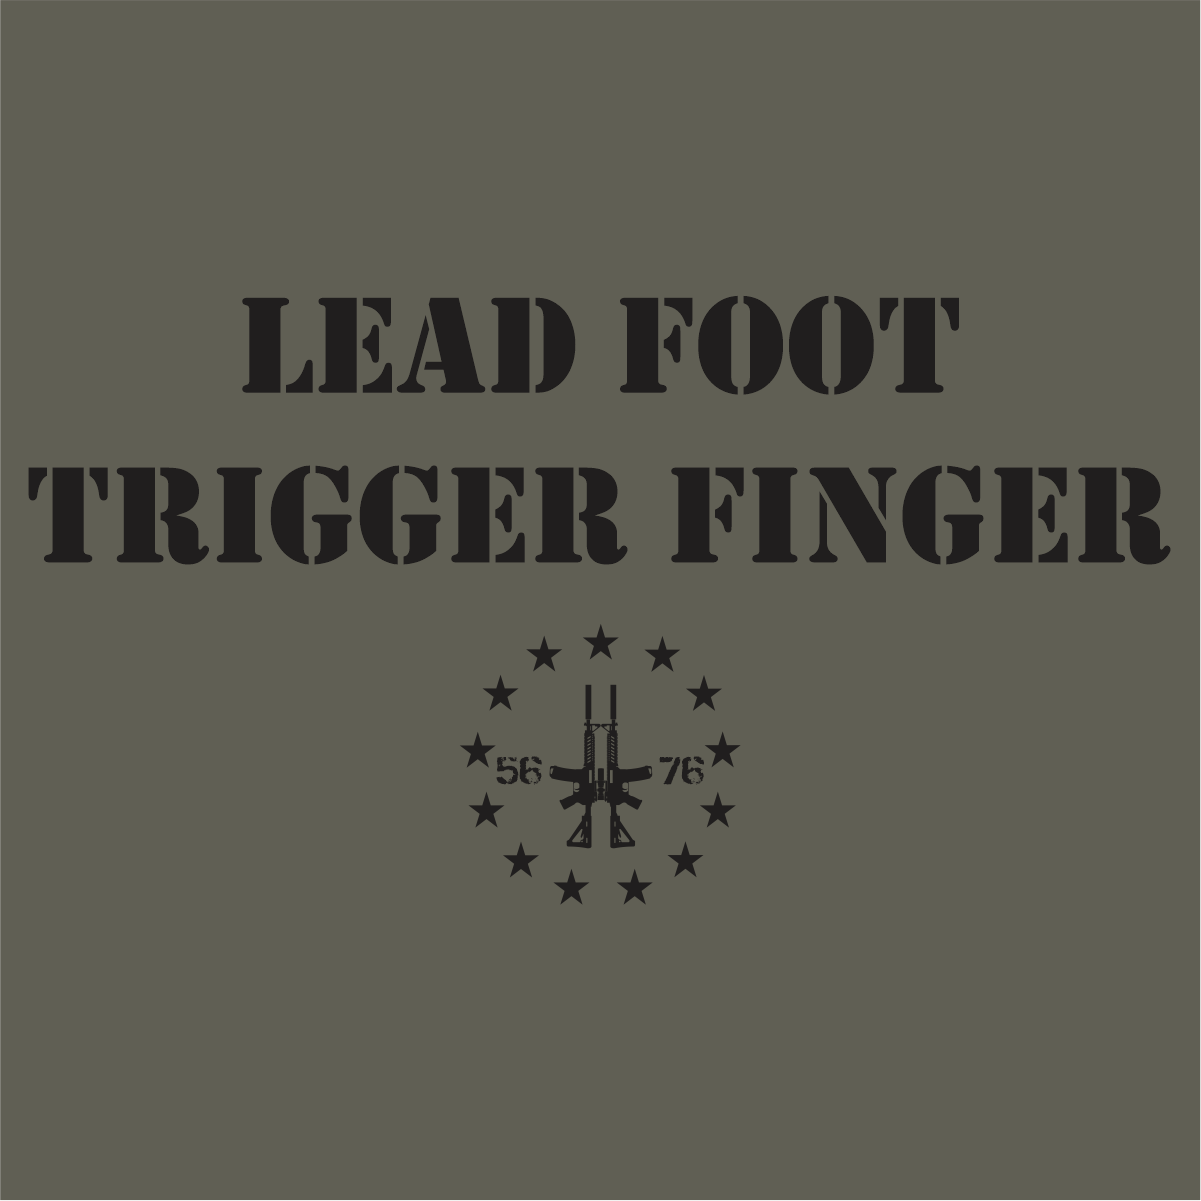 LEAD FOOT TRIGGER FINGER